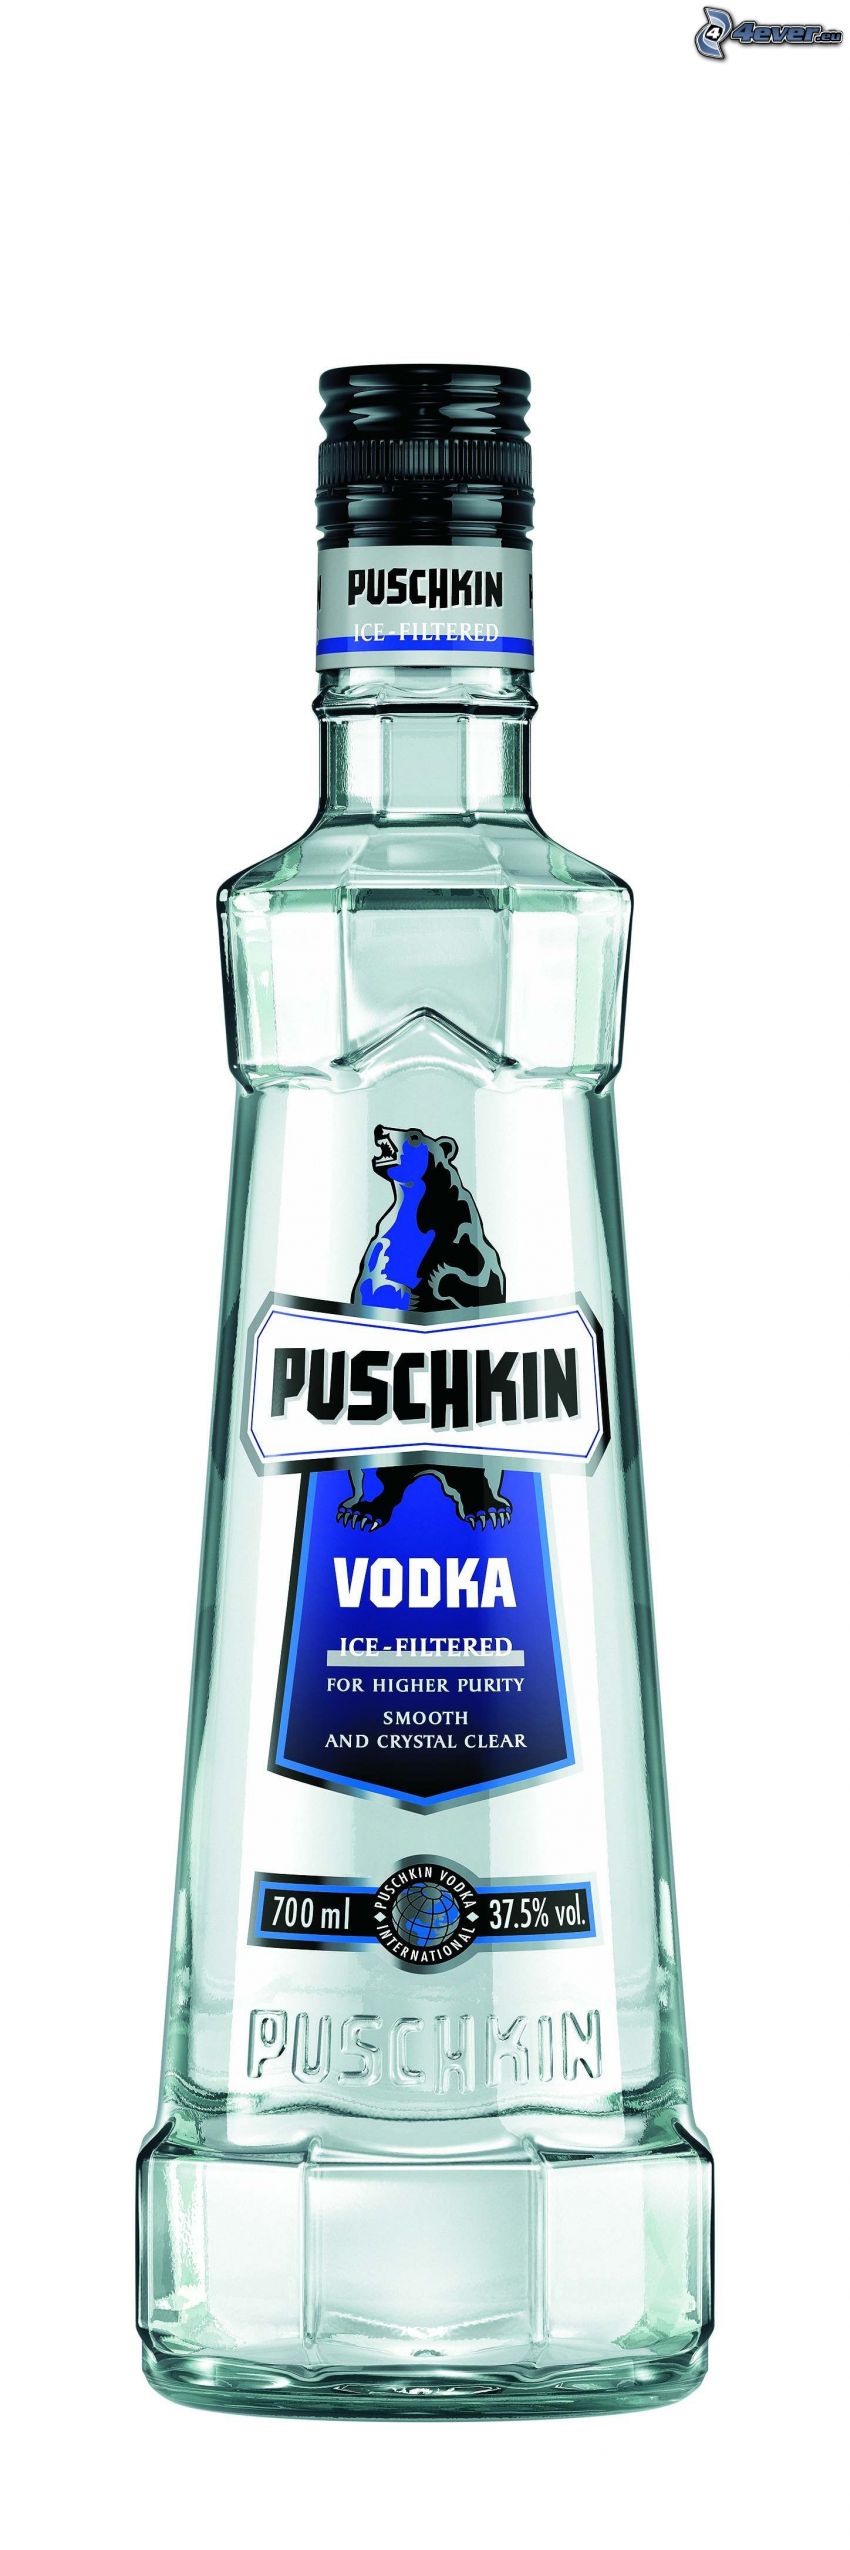 vodka Puschkin, alcohol